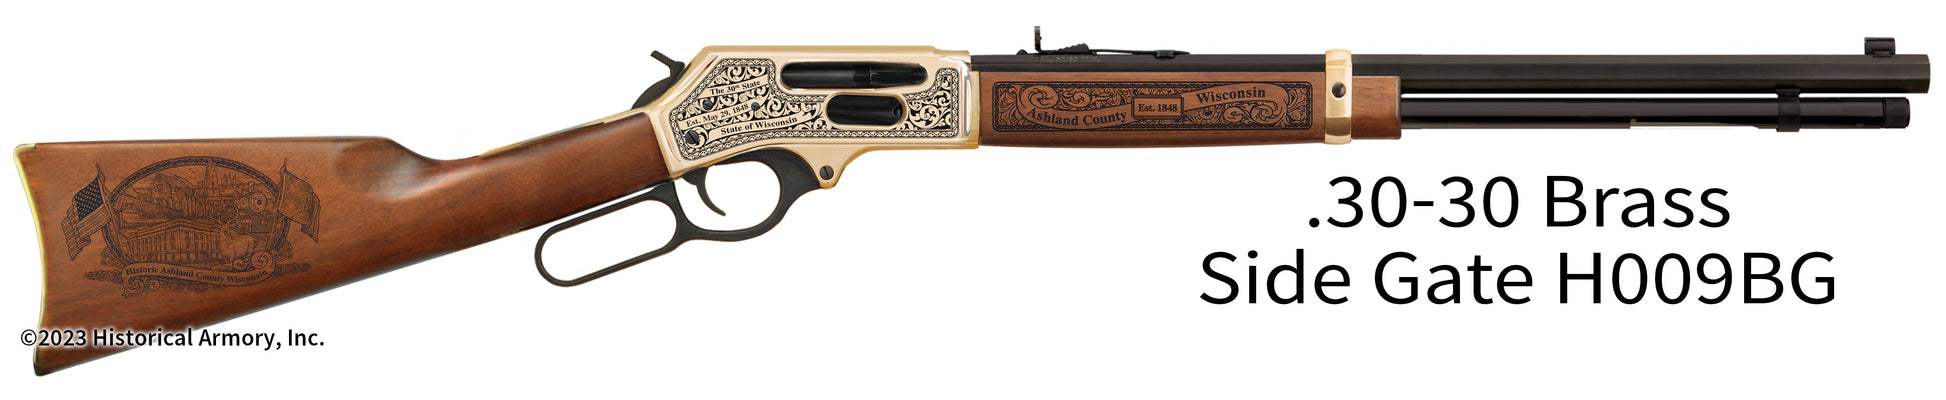 Ashland County Wisconsin Engraved Henry .30-30 Brass Side Gate Rifle